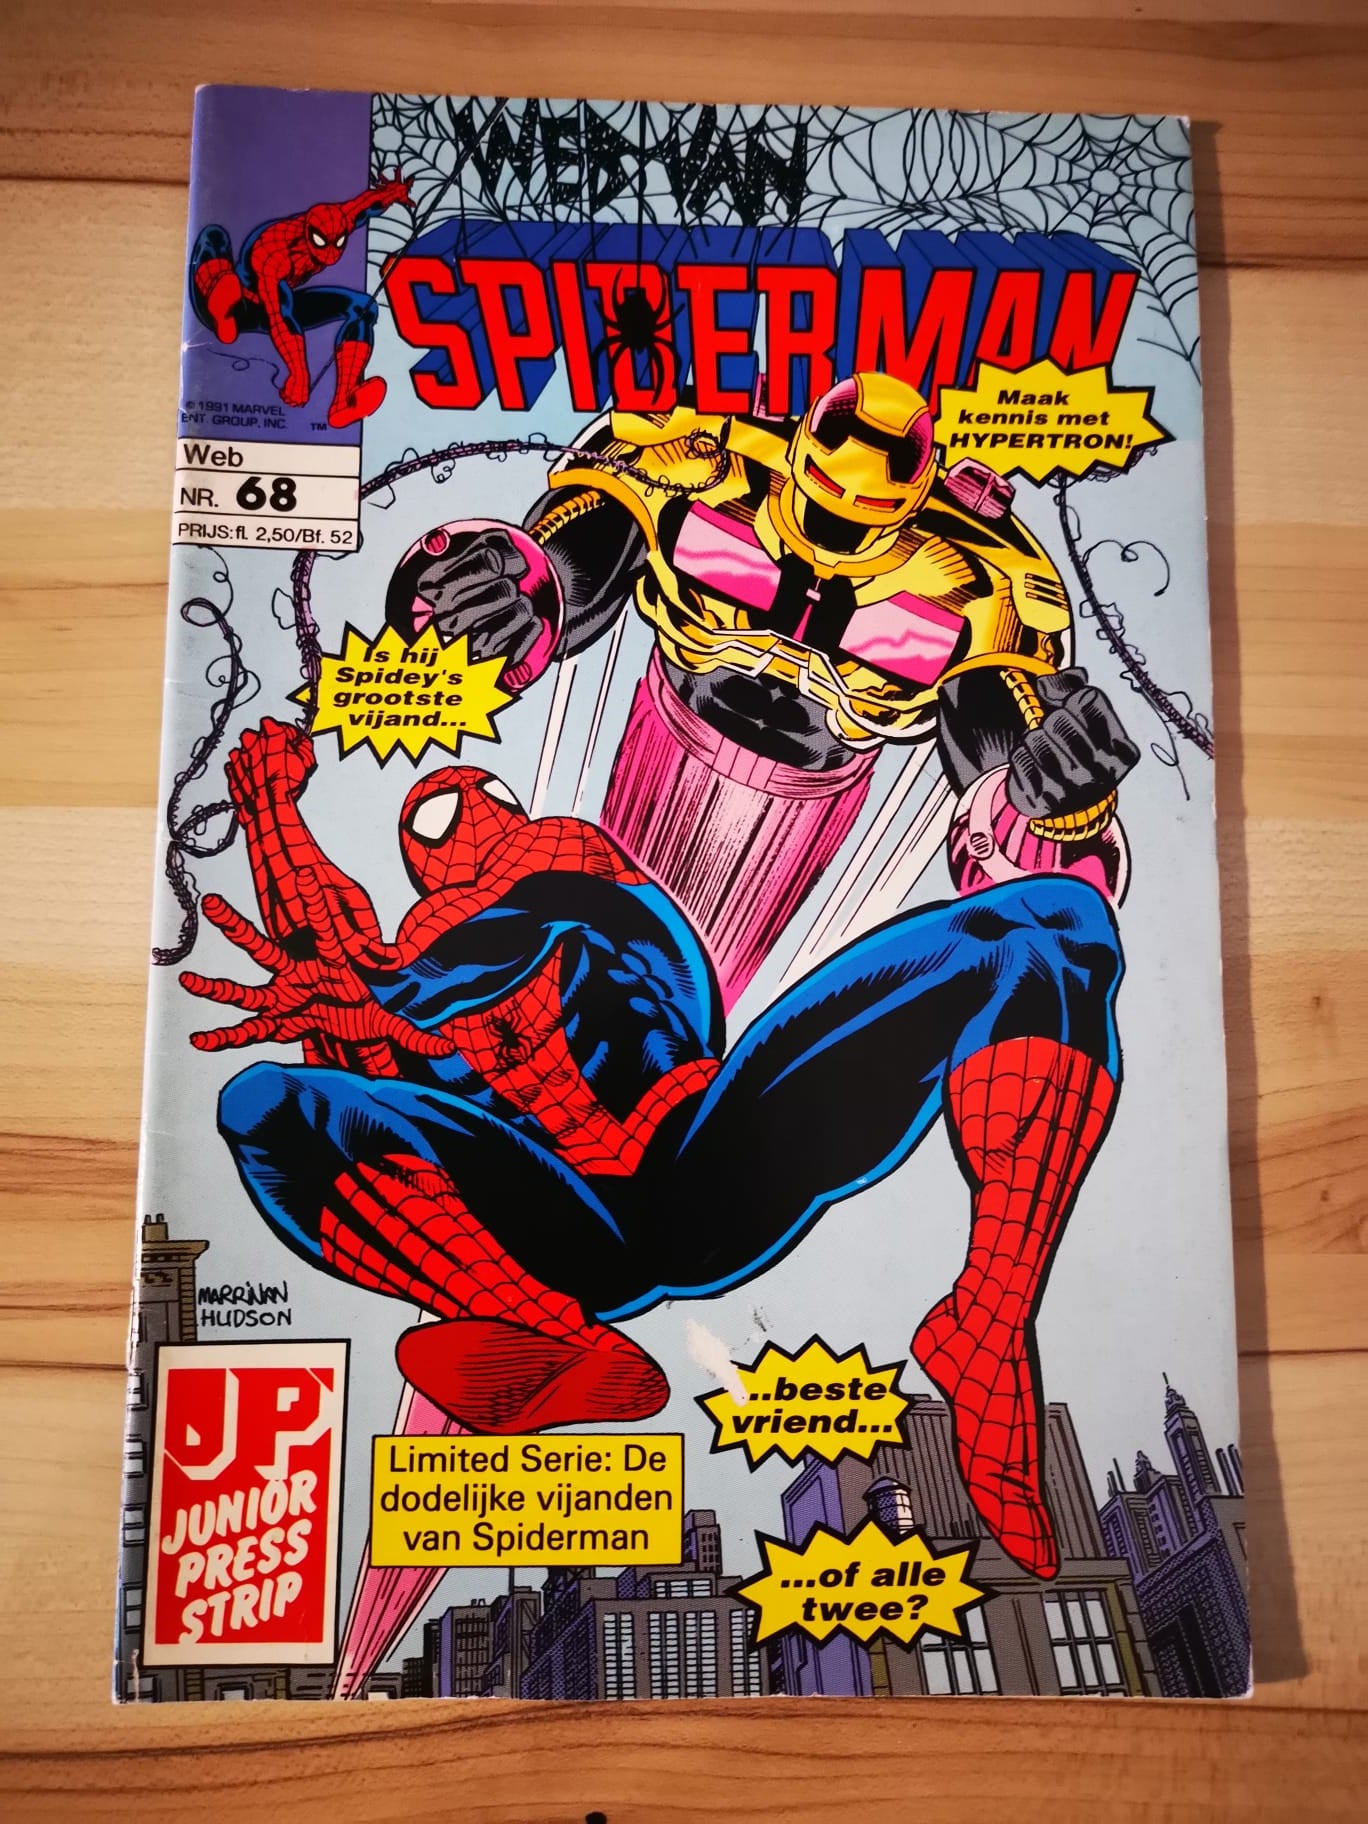 Web van spiderman #68